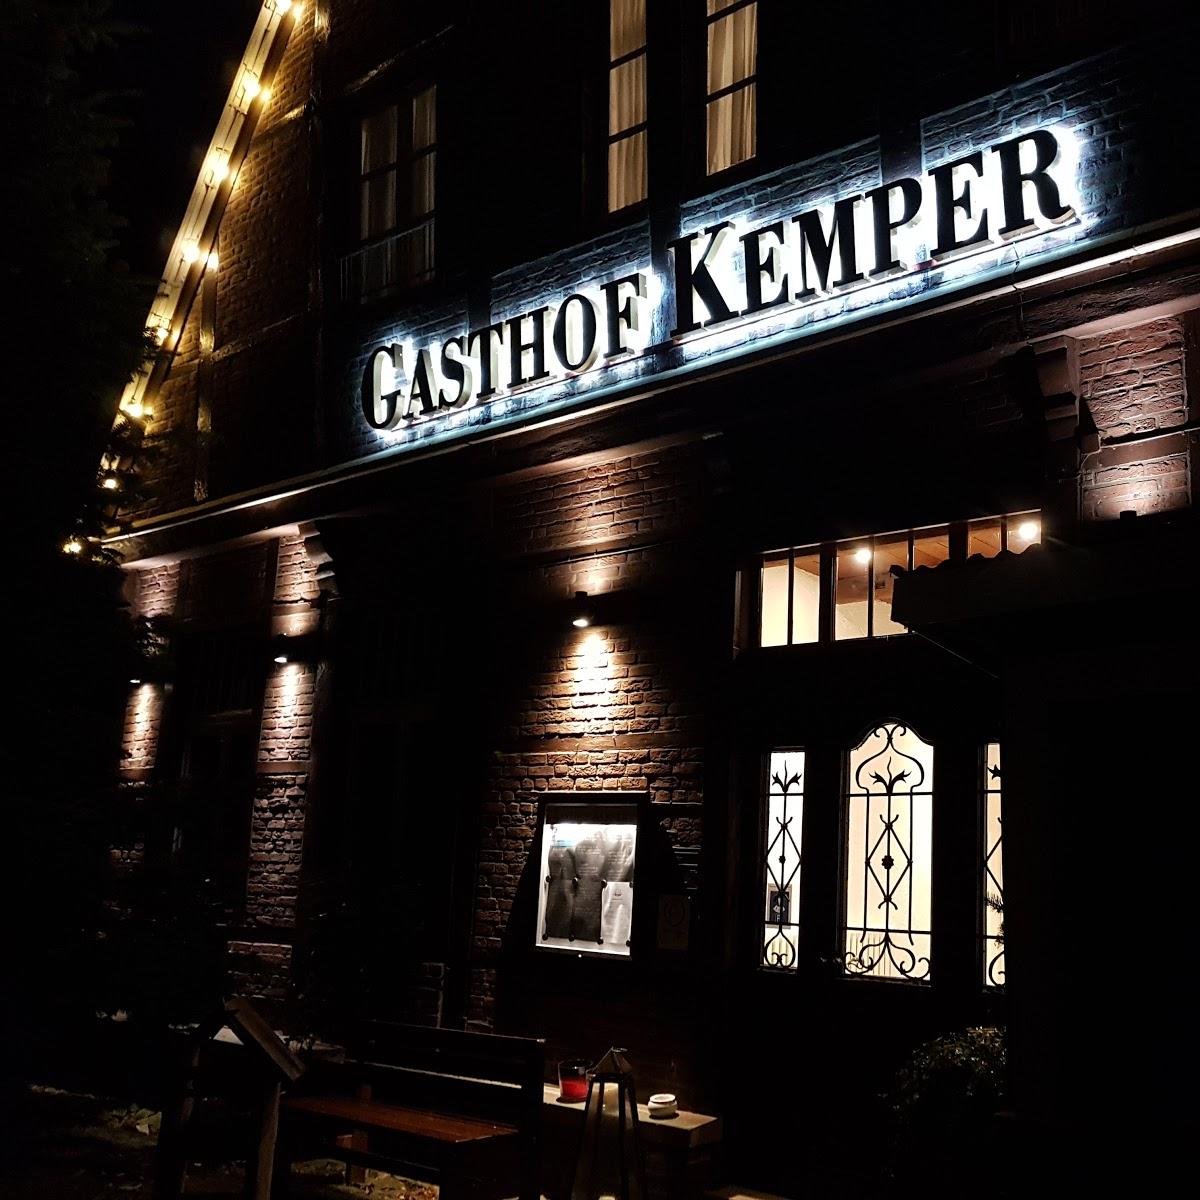 Restaurant "Gasthof & Hotel Kemper" in  Havixbeck